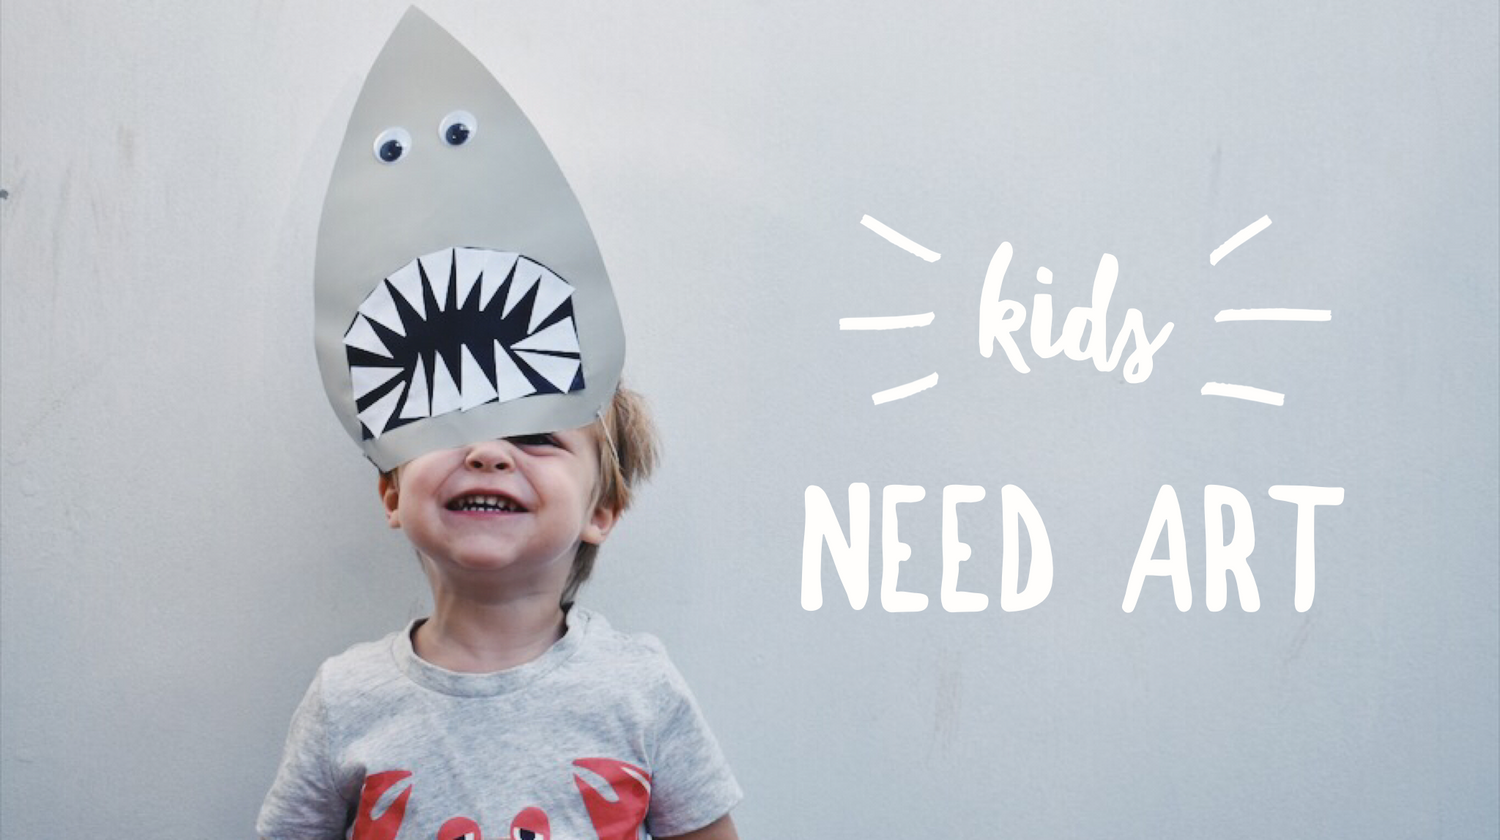 Shark head art. Why do kids need art?